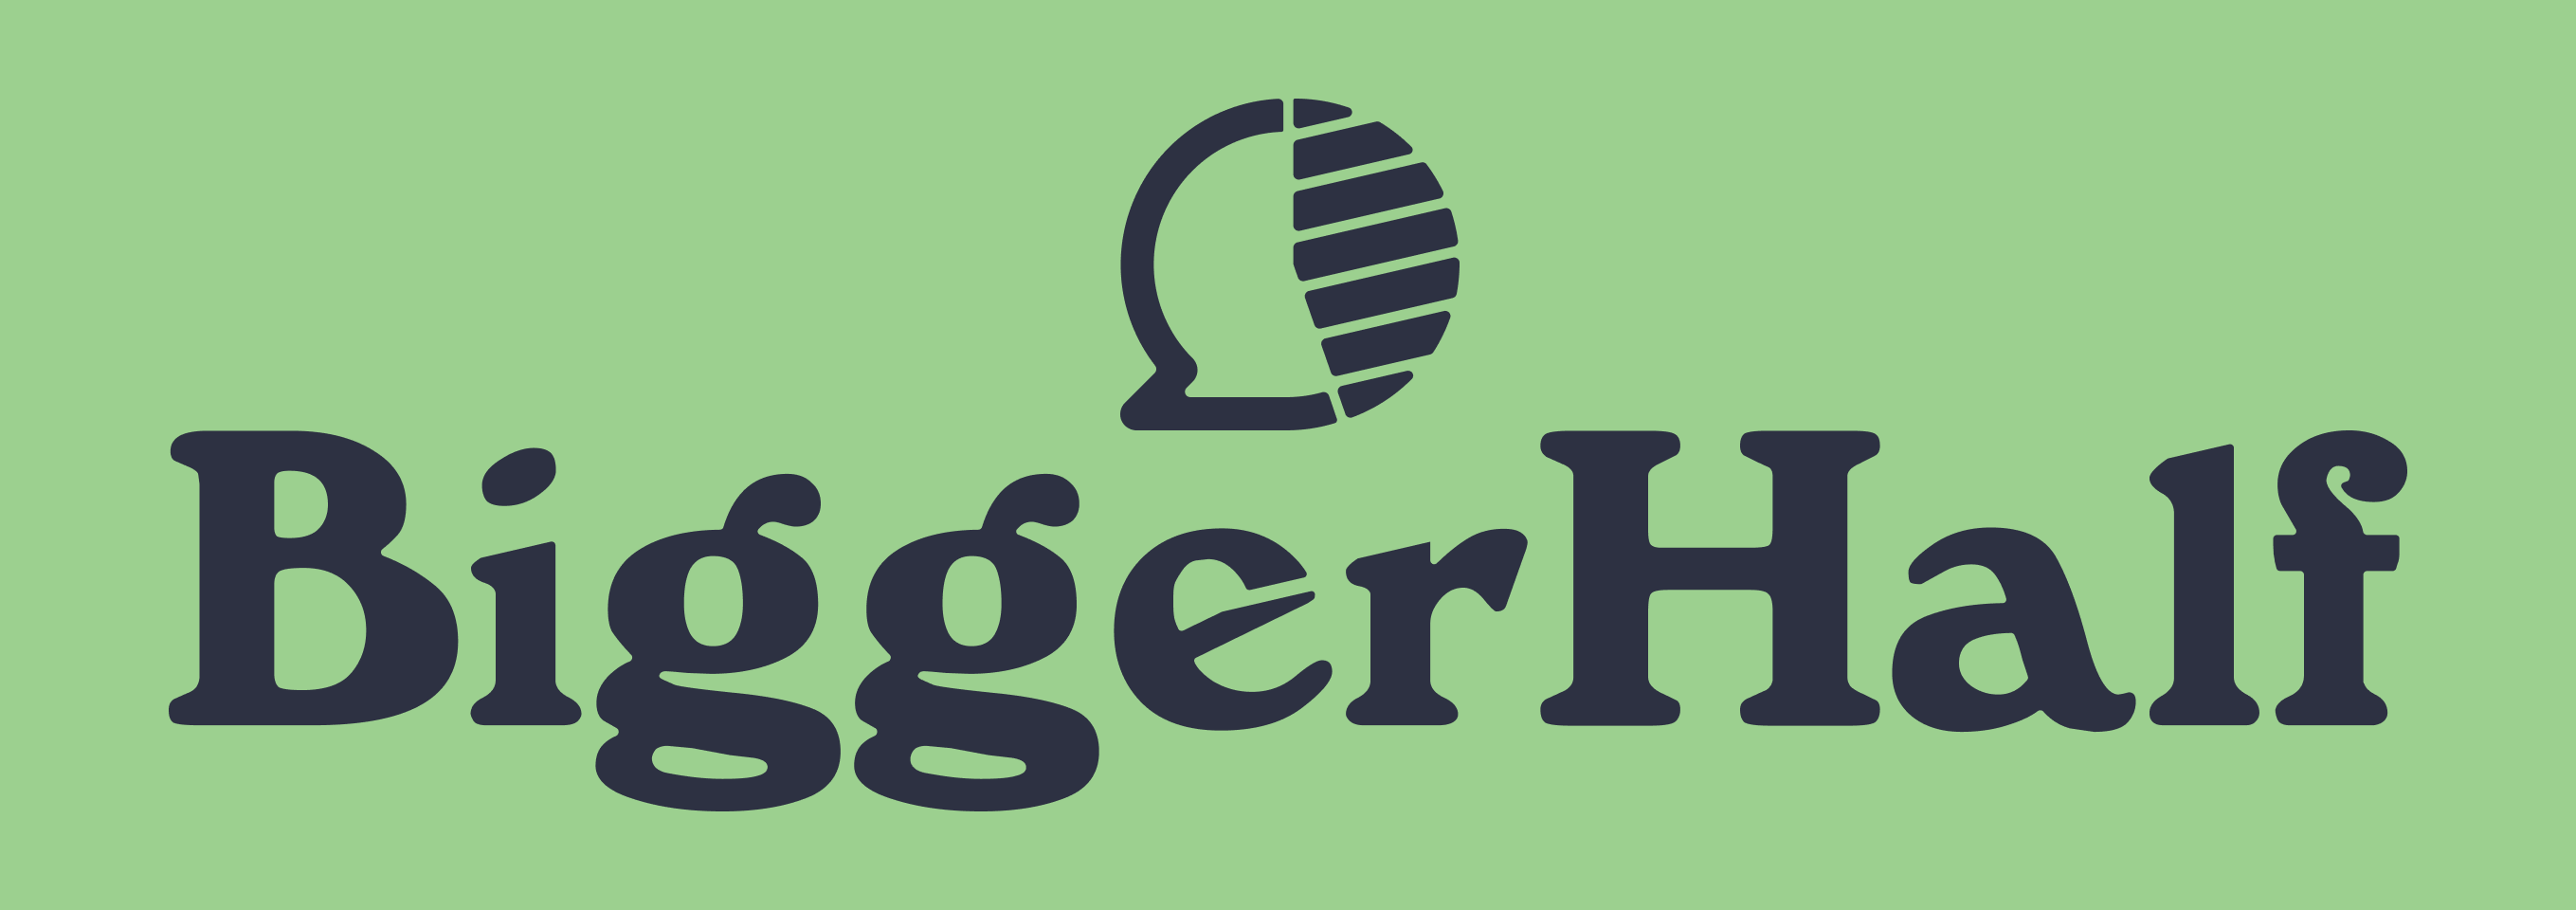 Company logo image - Bigger Half